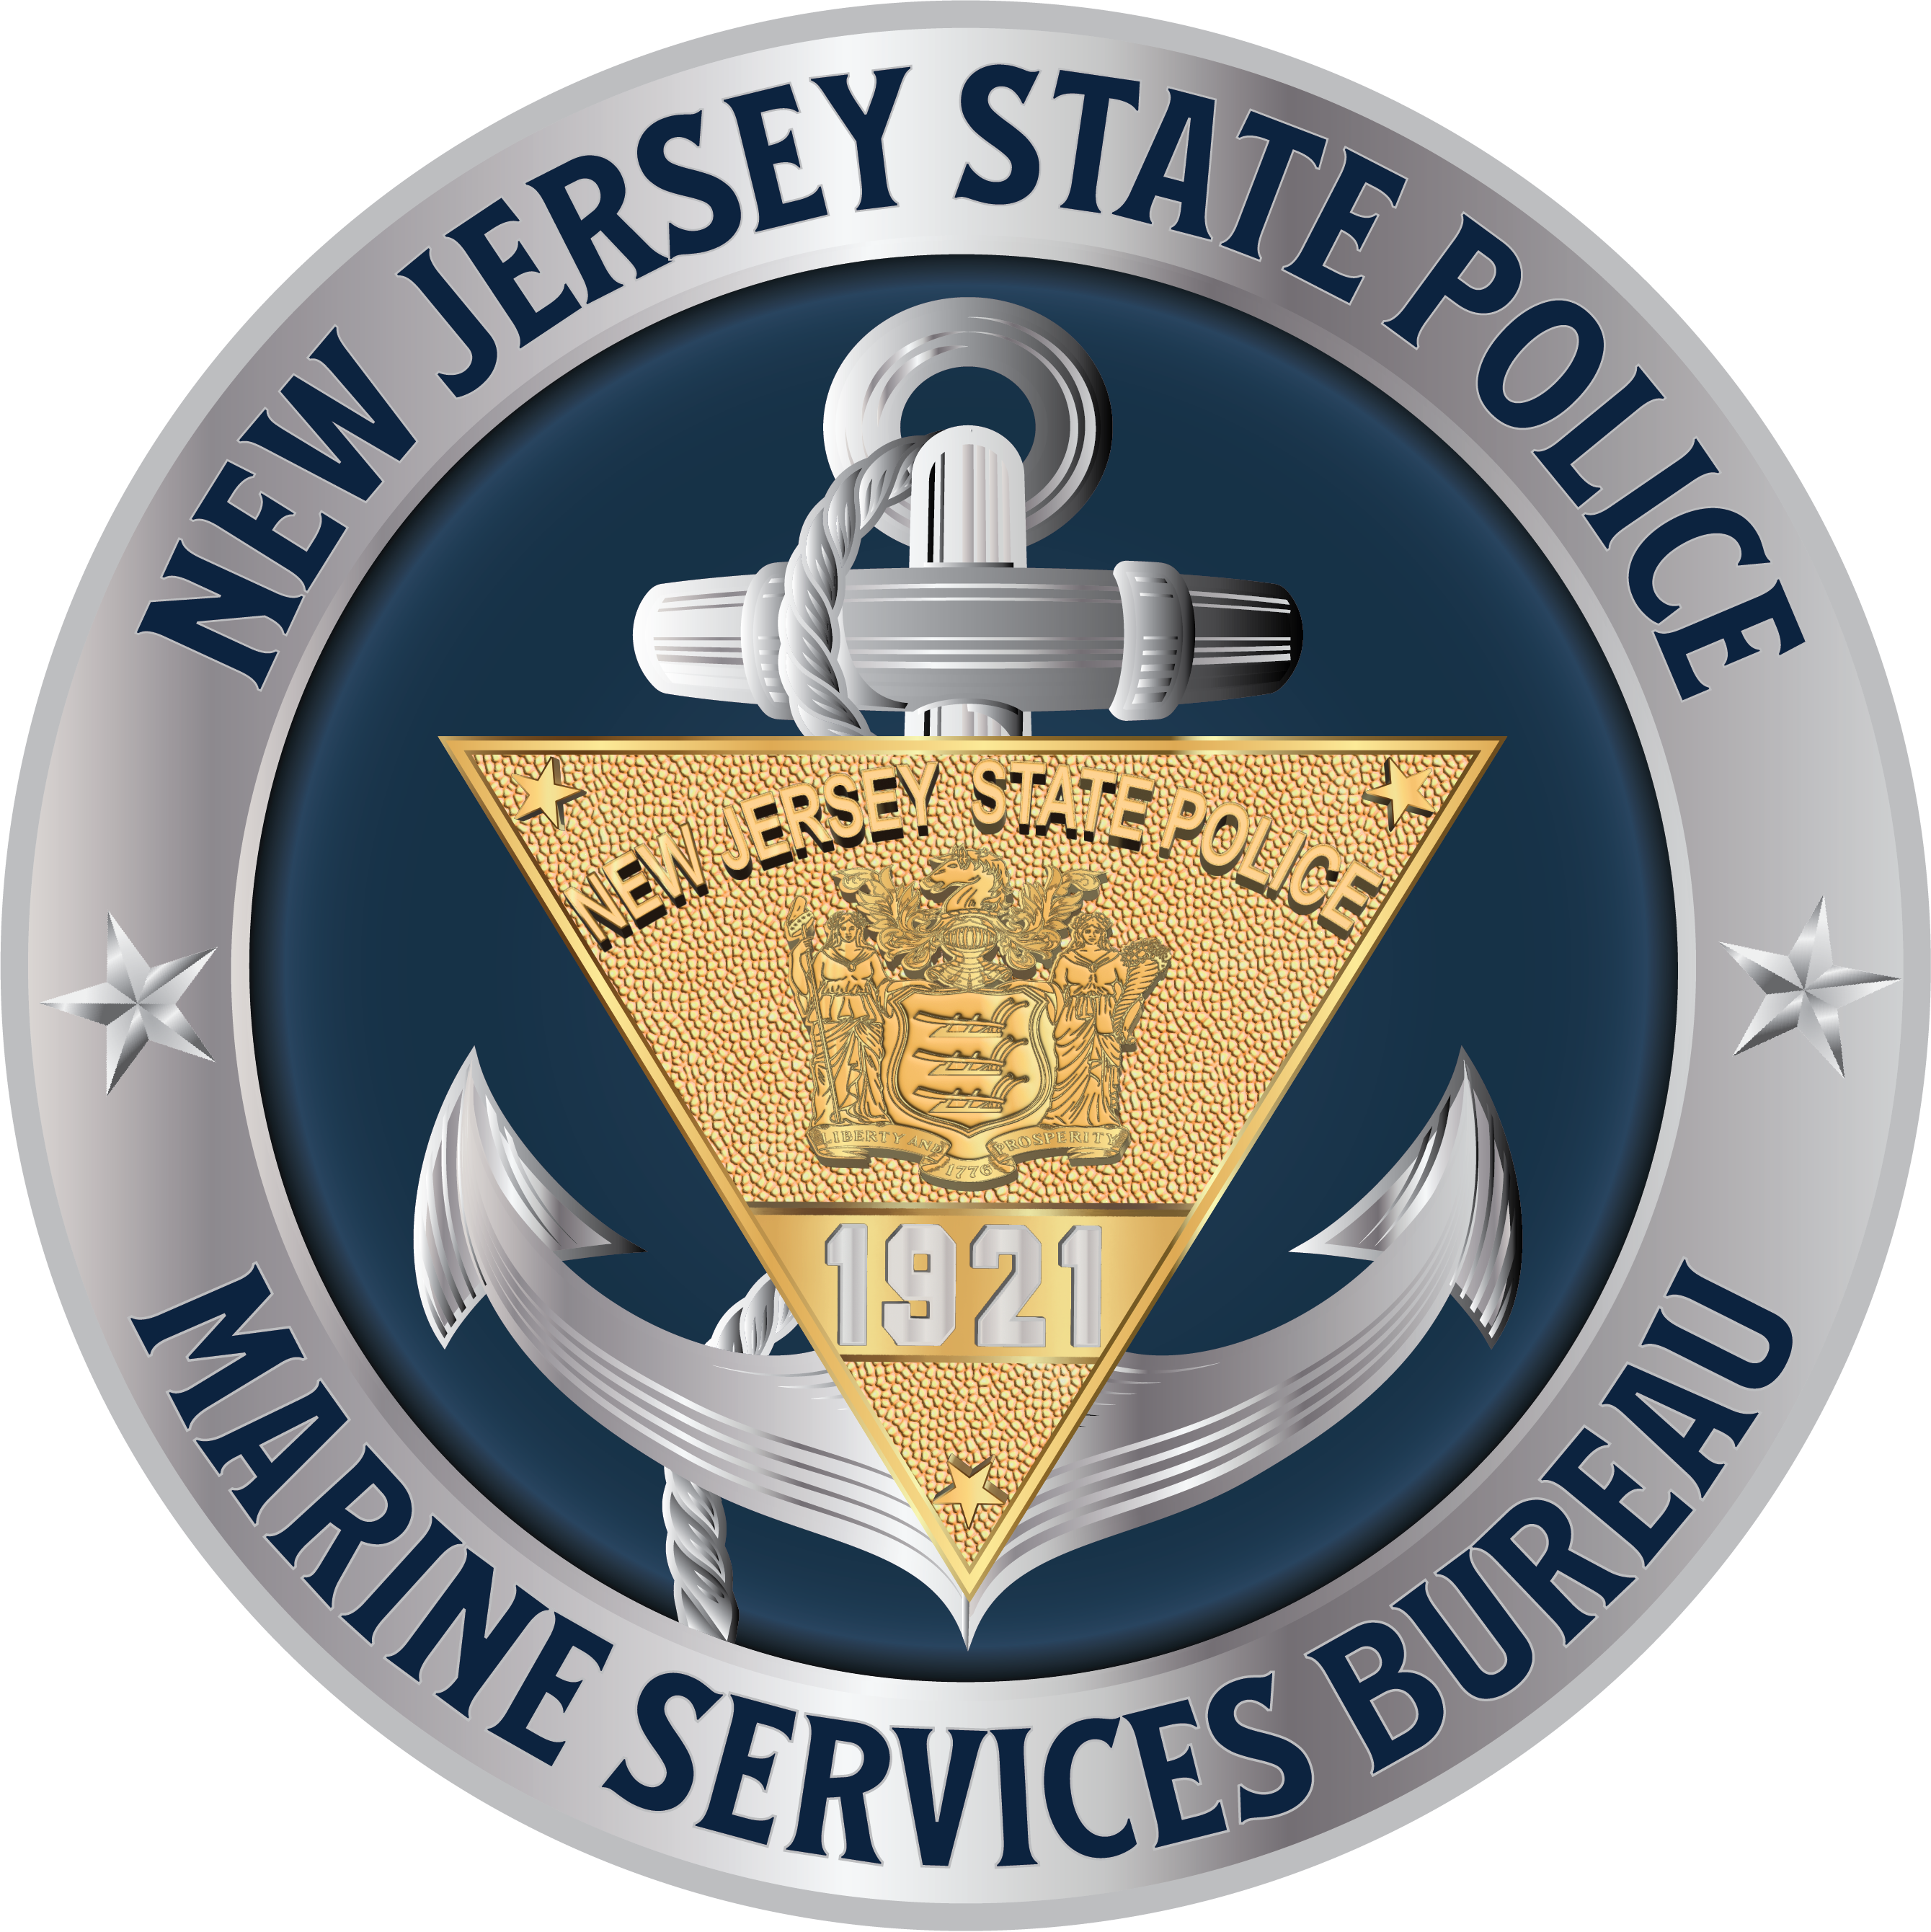 Marine Services Bureau logo